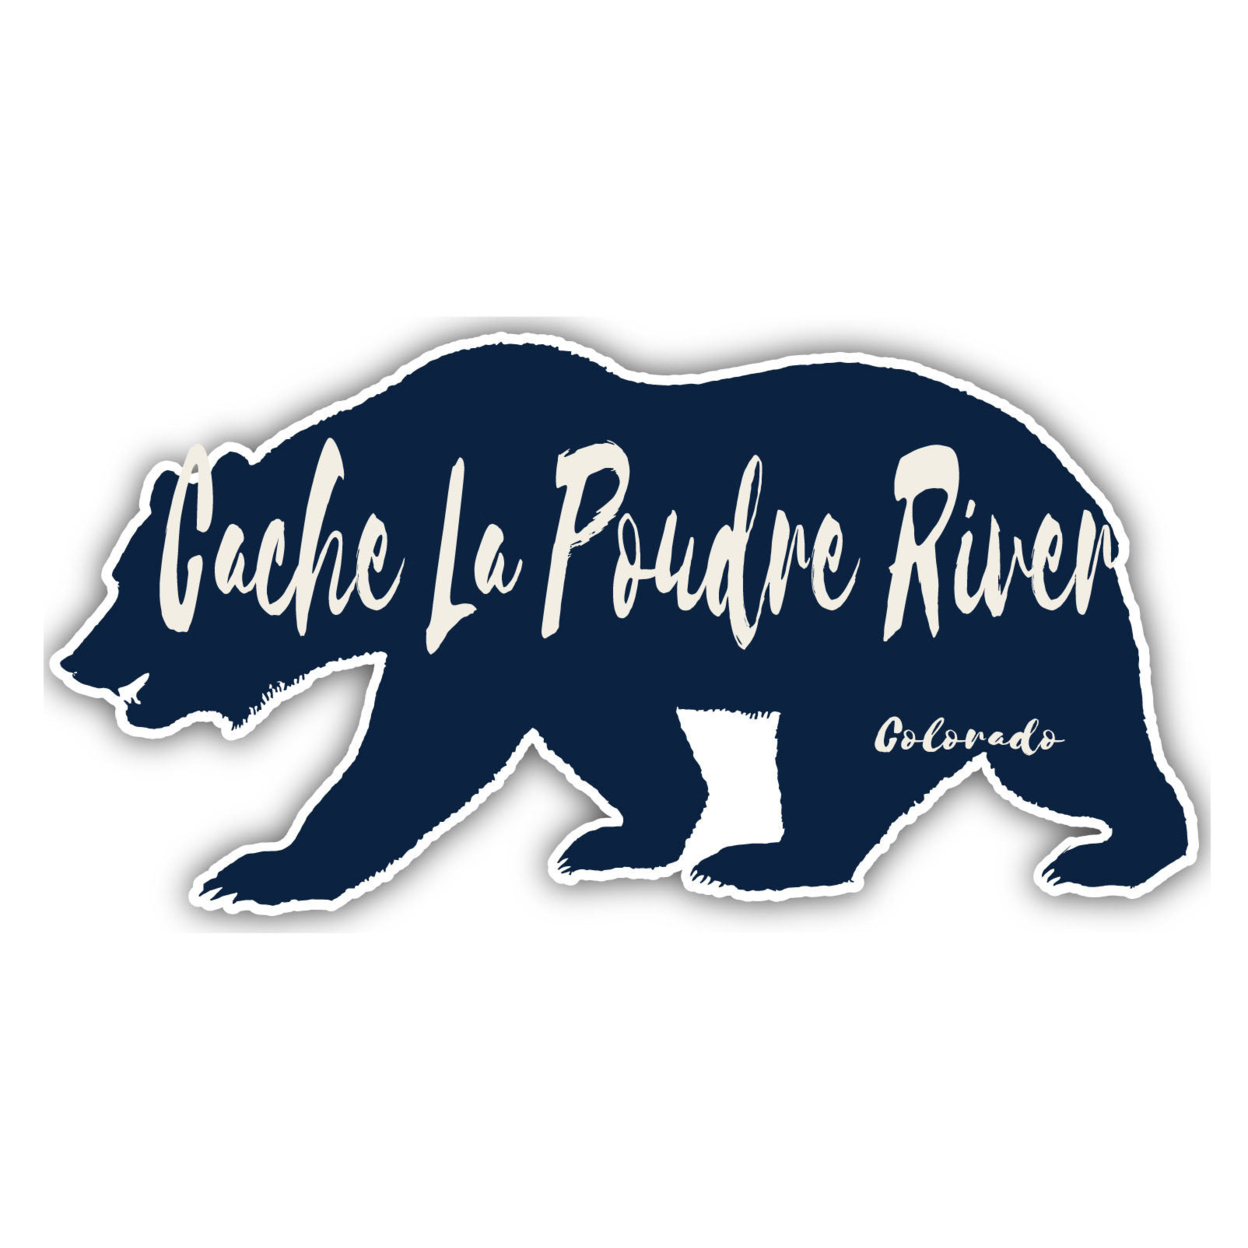 Cache La Poudre River Colorado Souvenir Decorative Stickers (Choose Theme And Size) - 4-Pack, 12-Inch, Tent